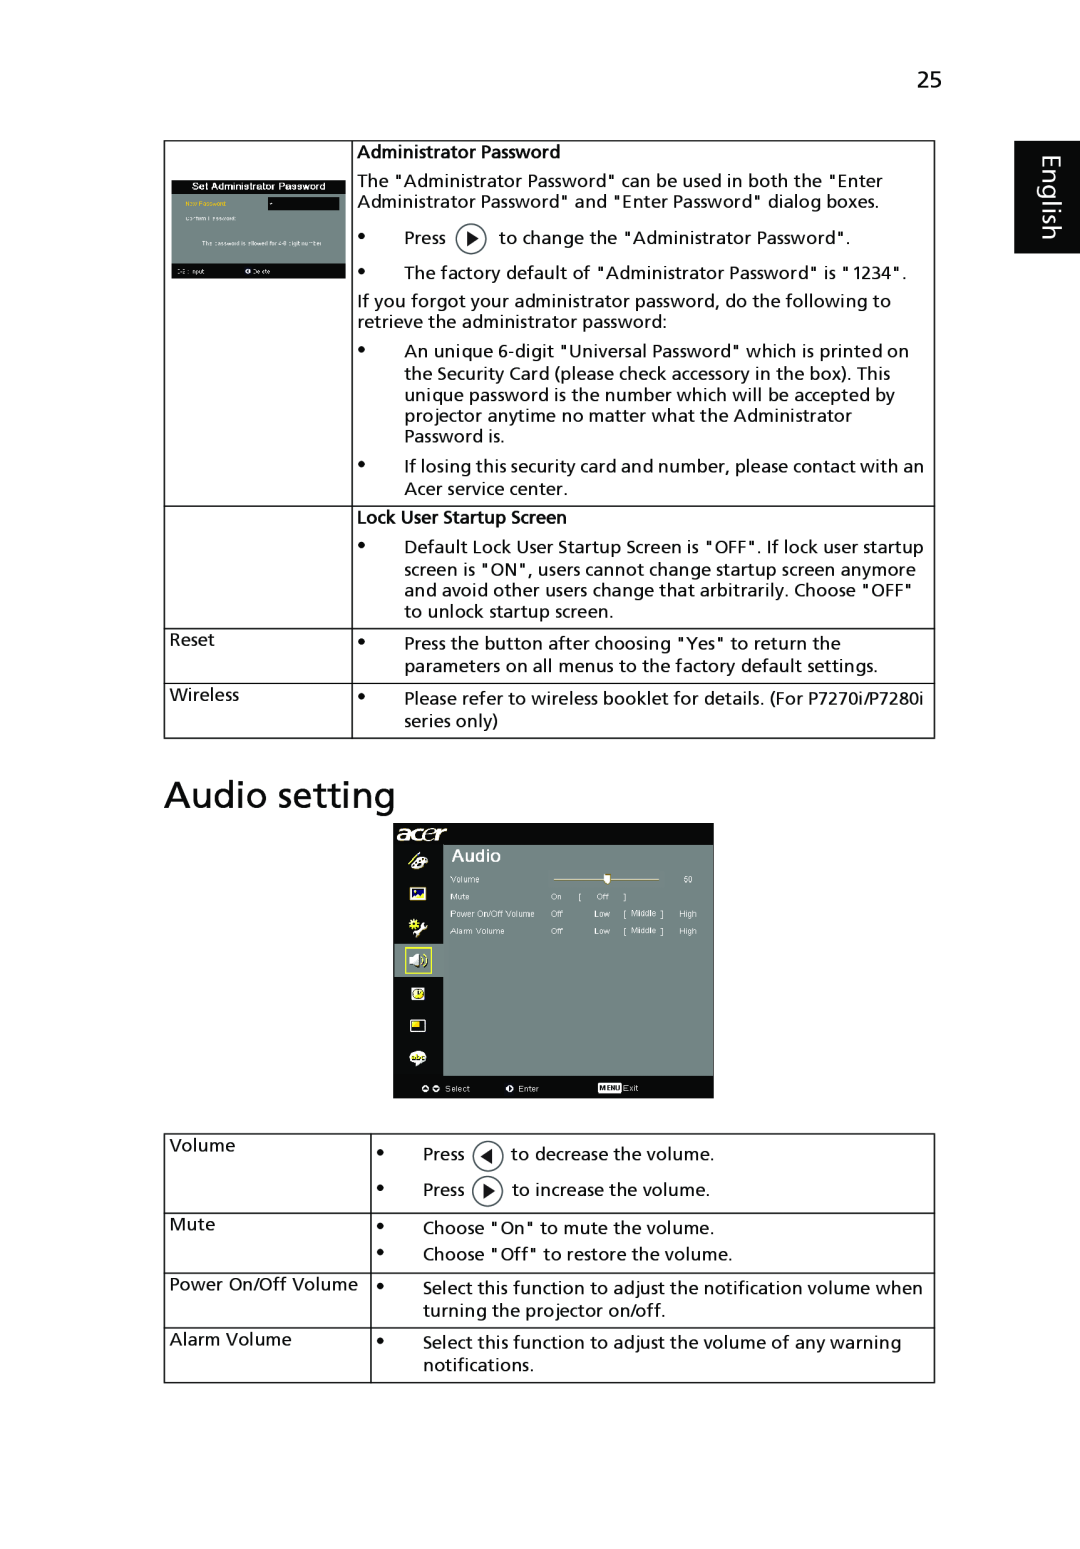 Acer P7280i Series, P7270i manual Audio setting, English, Administrator Password, Lock User Startup Screen 